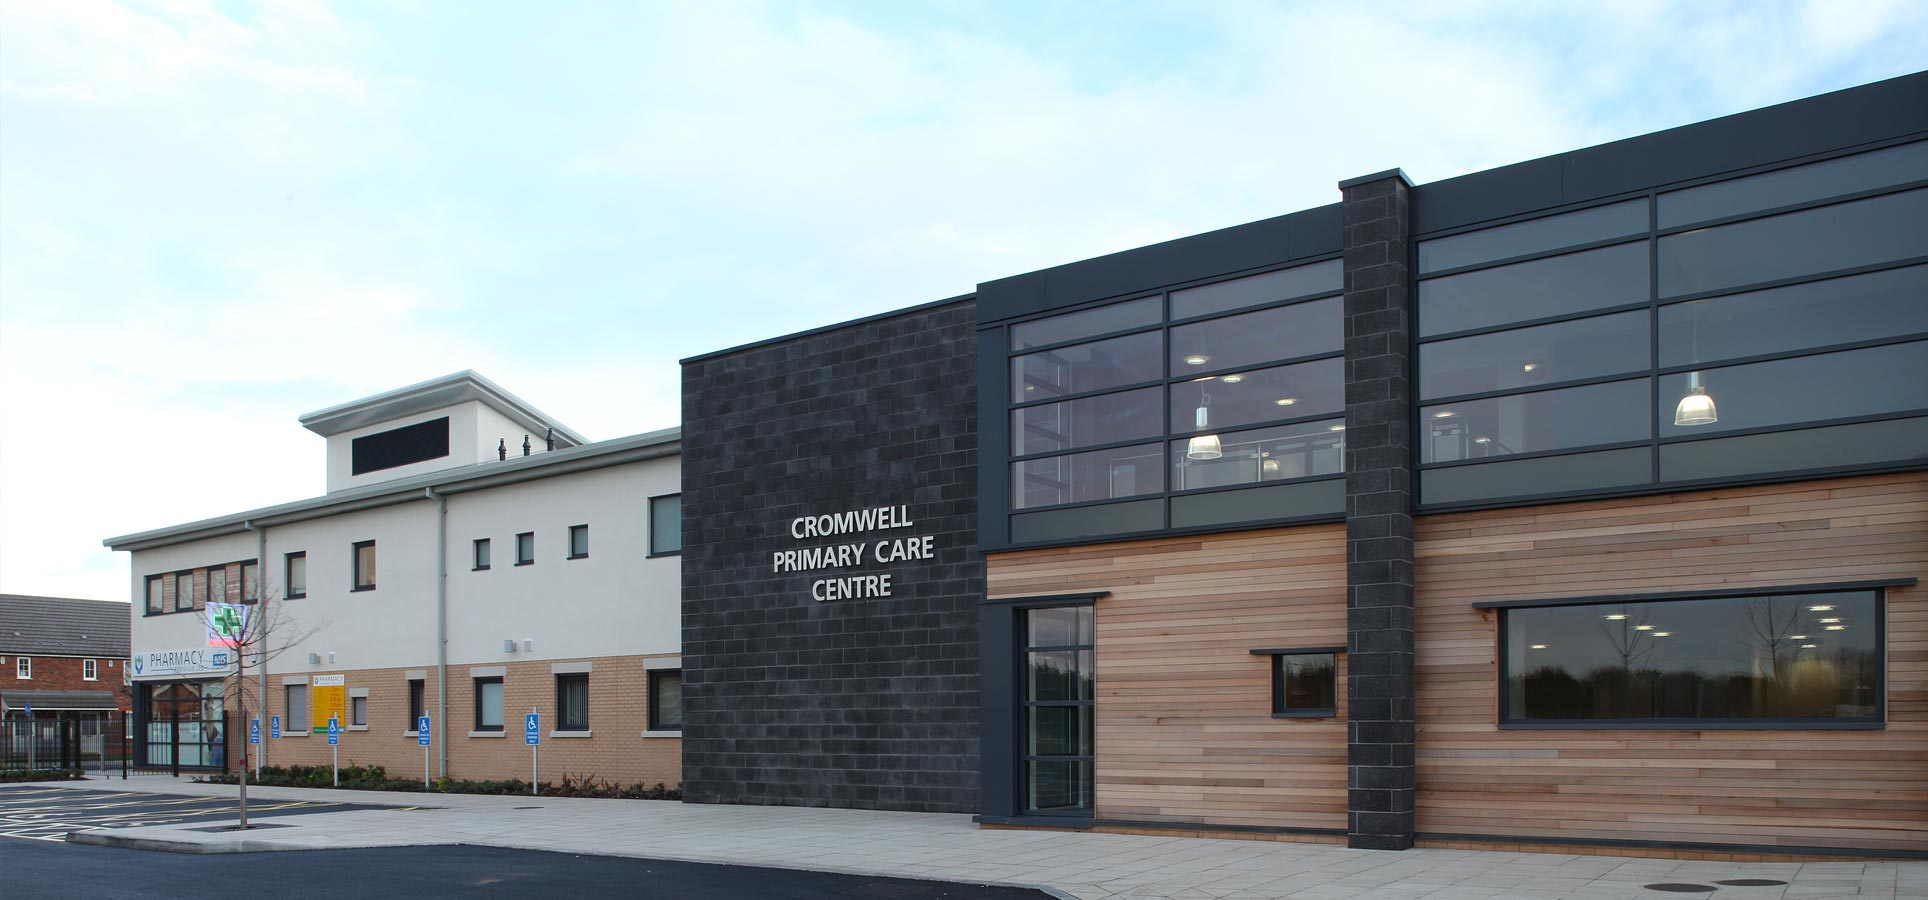 Cromwell Primary Care CTR, Jessops Construction Ltd